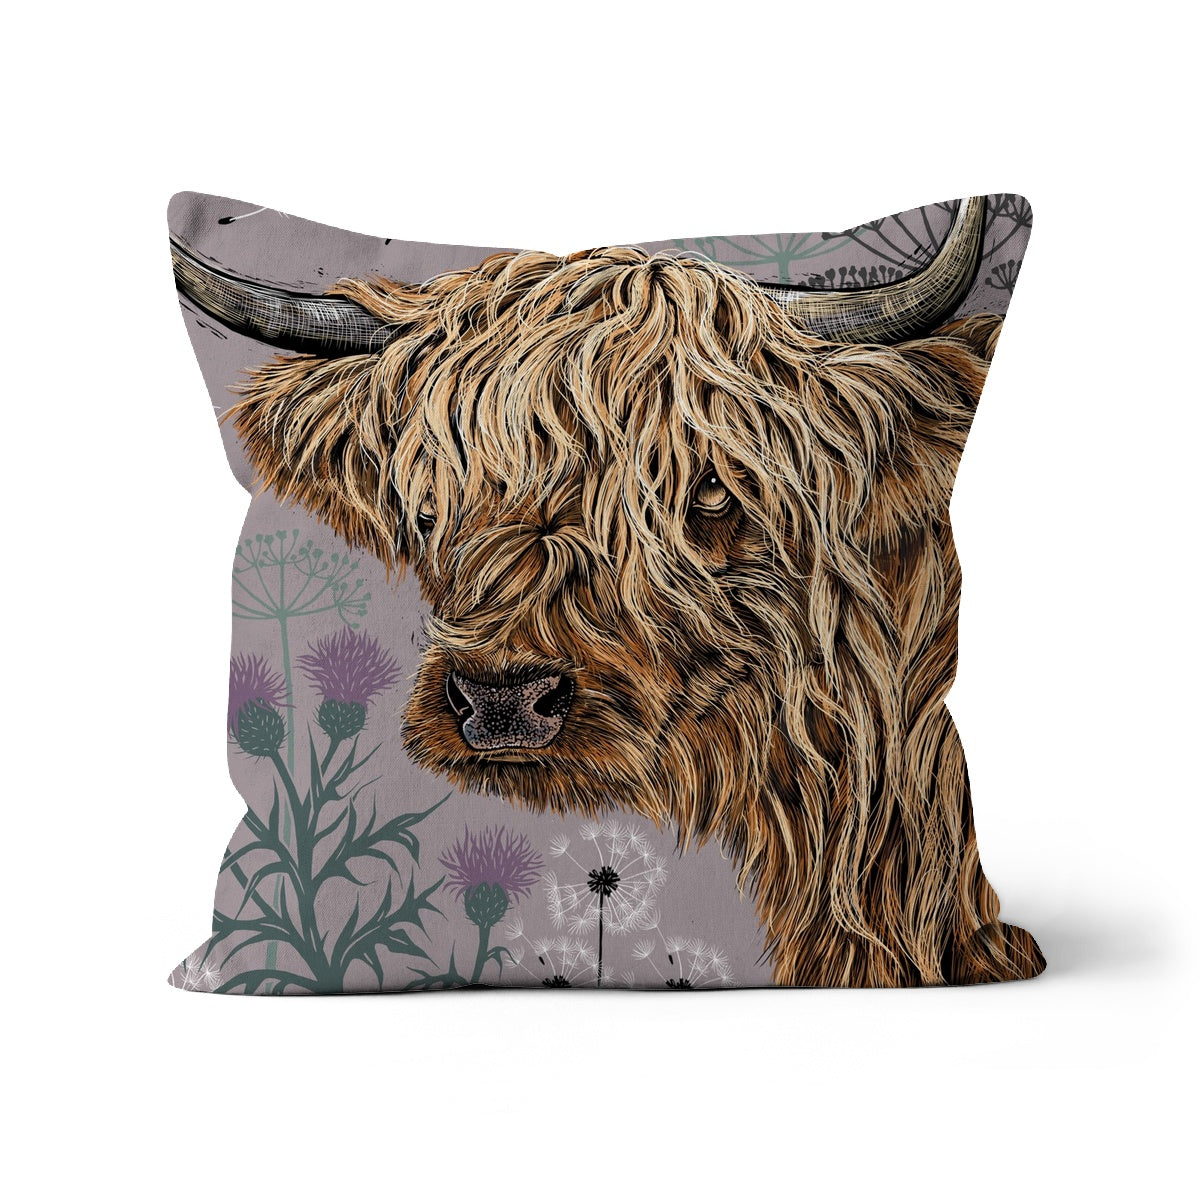 HIghland Cow cushion; Heeland Coo cushion, by Fox and Boo